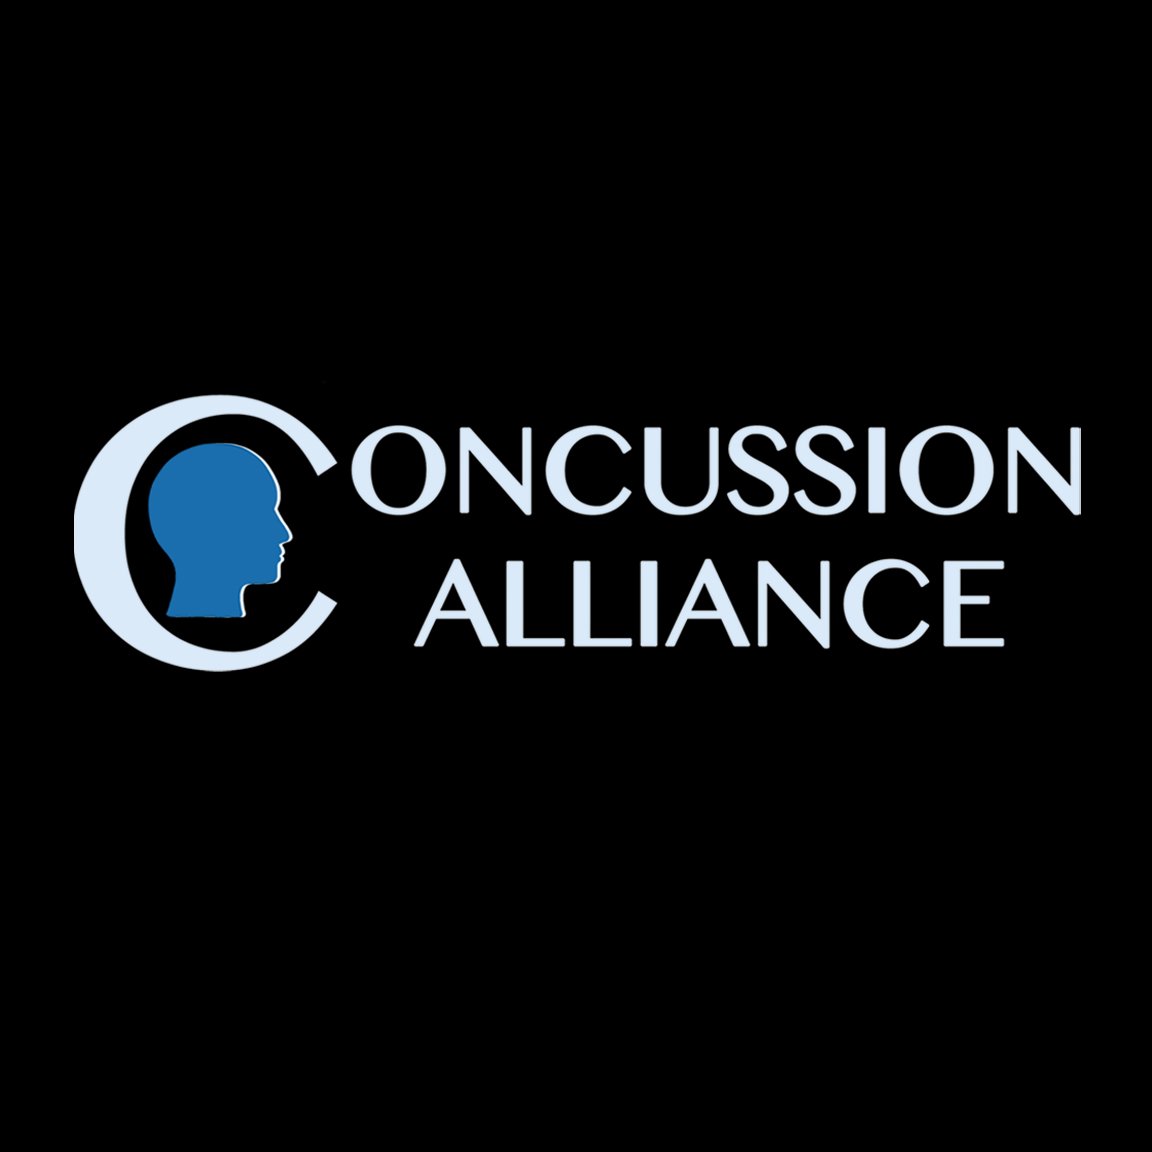 www.concussionalliance.org